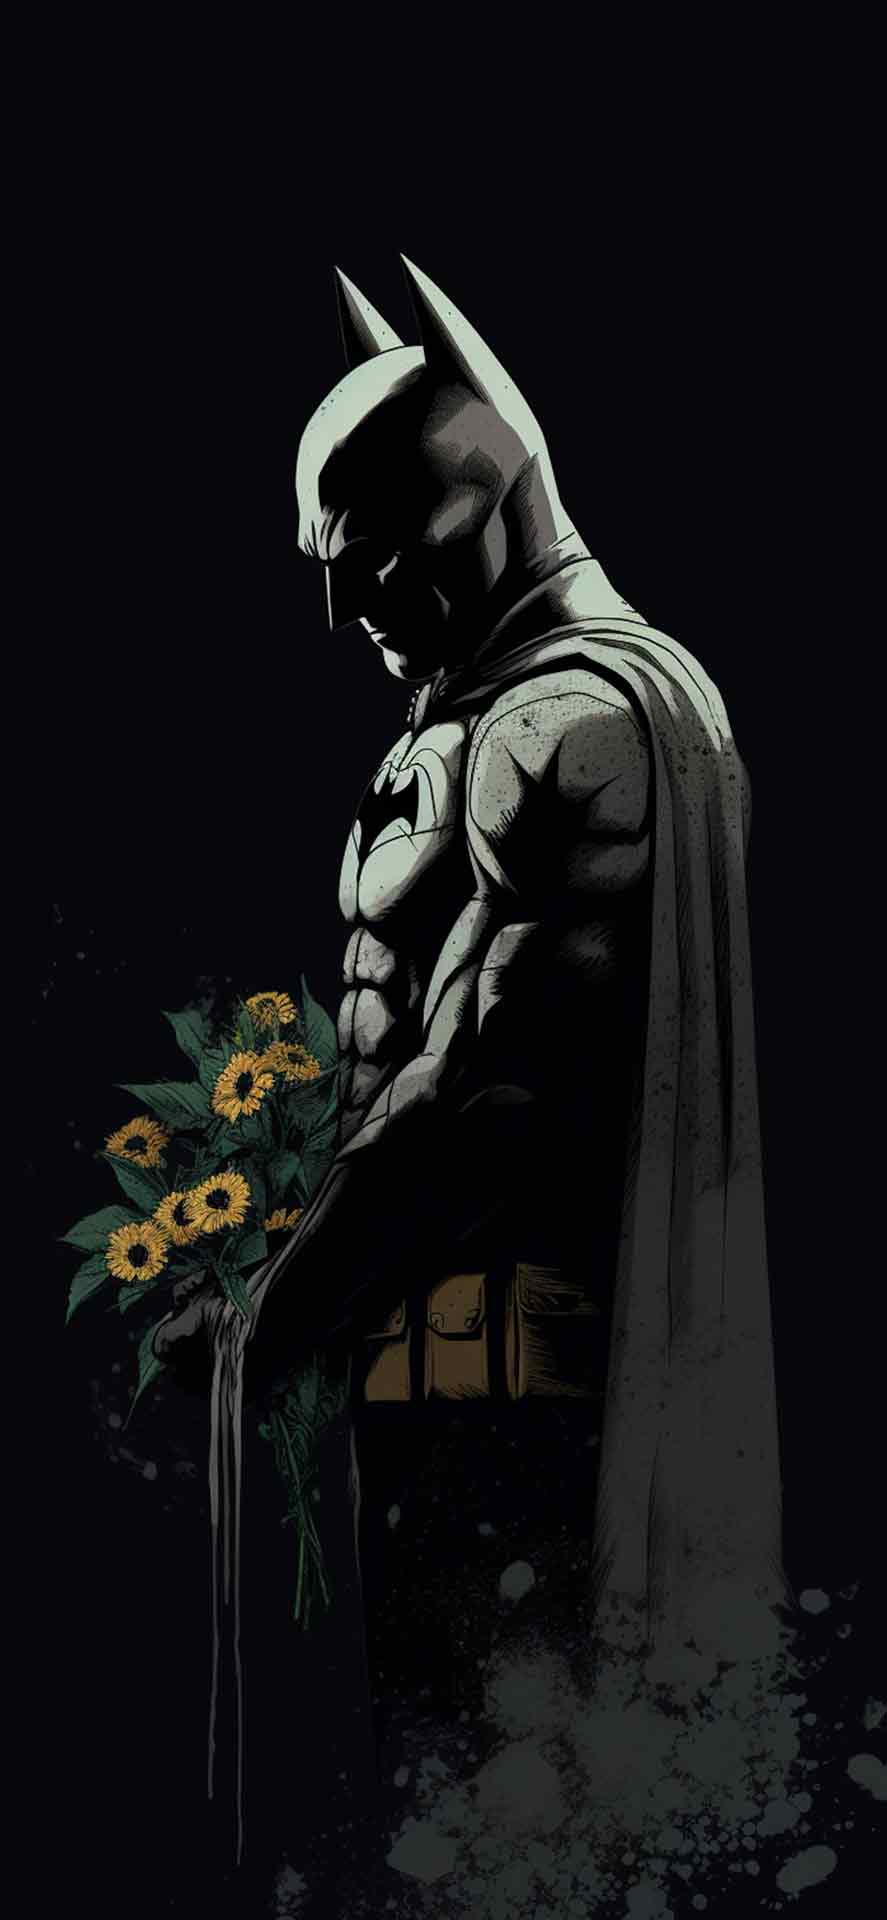 DC蝙蝠侠与花朵黑暗壁纸